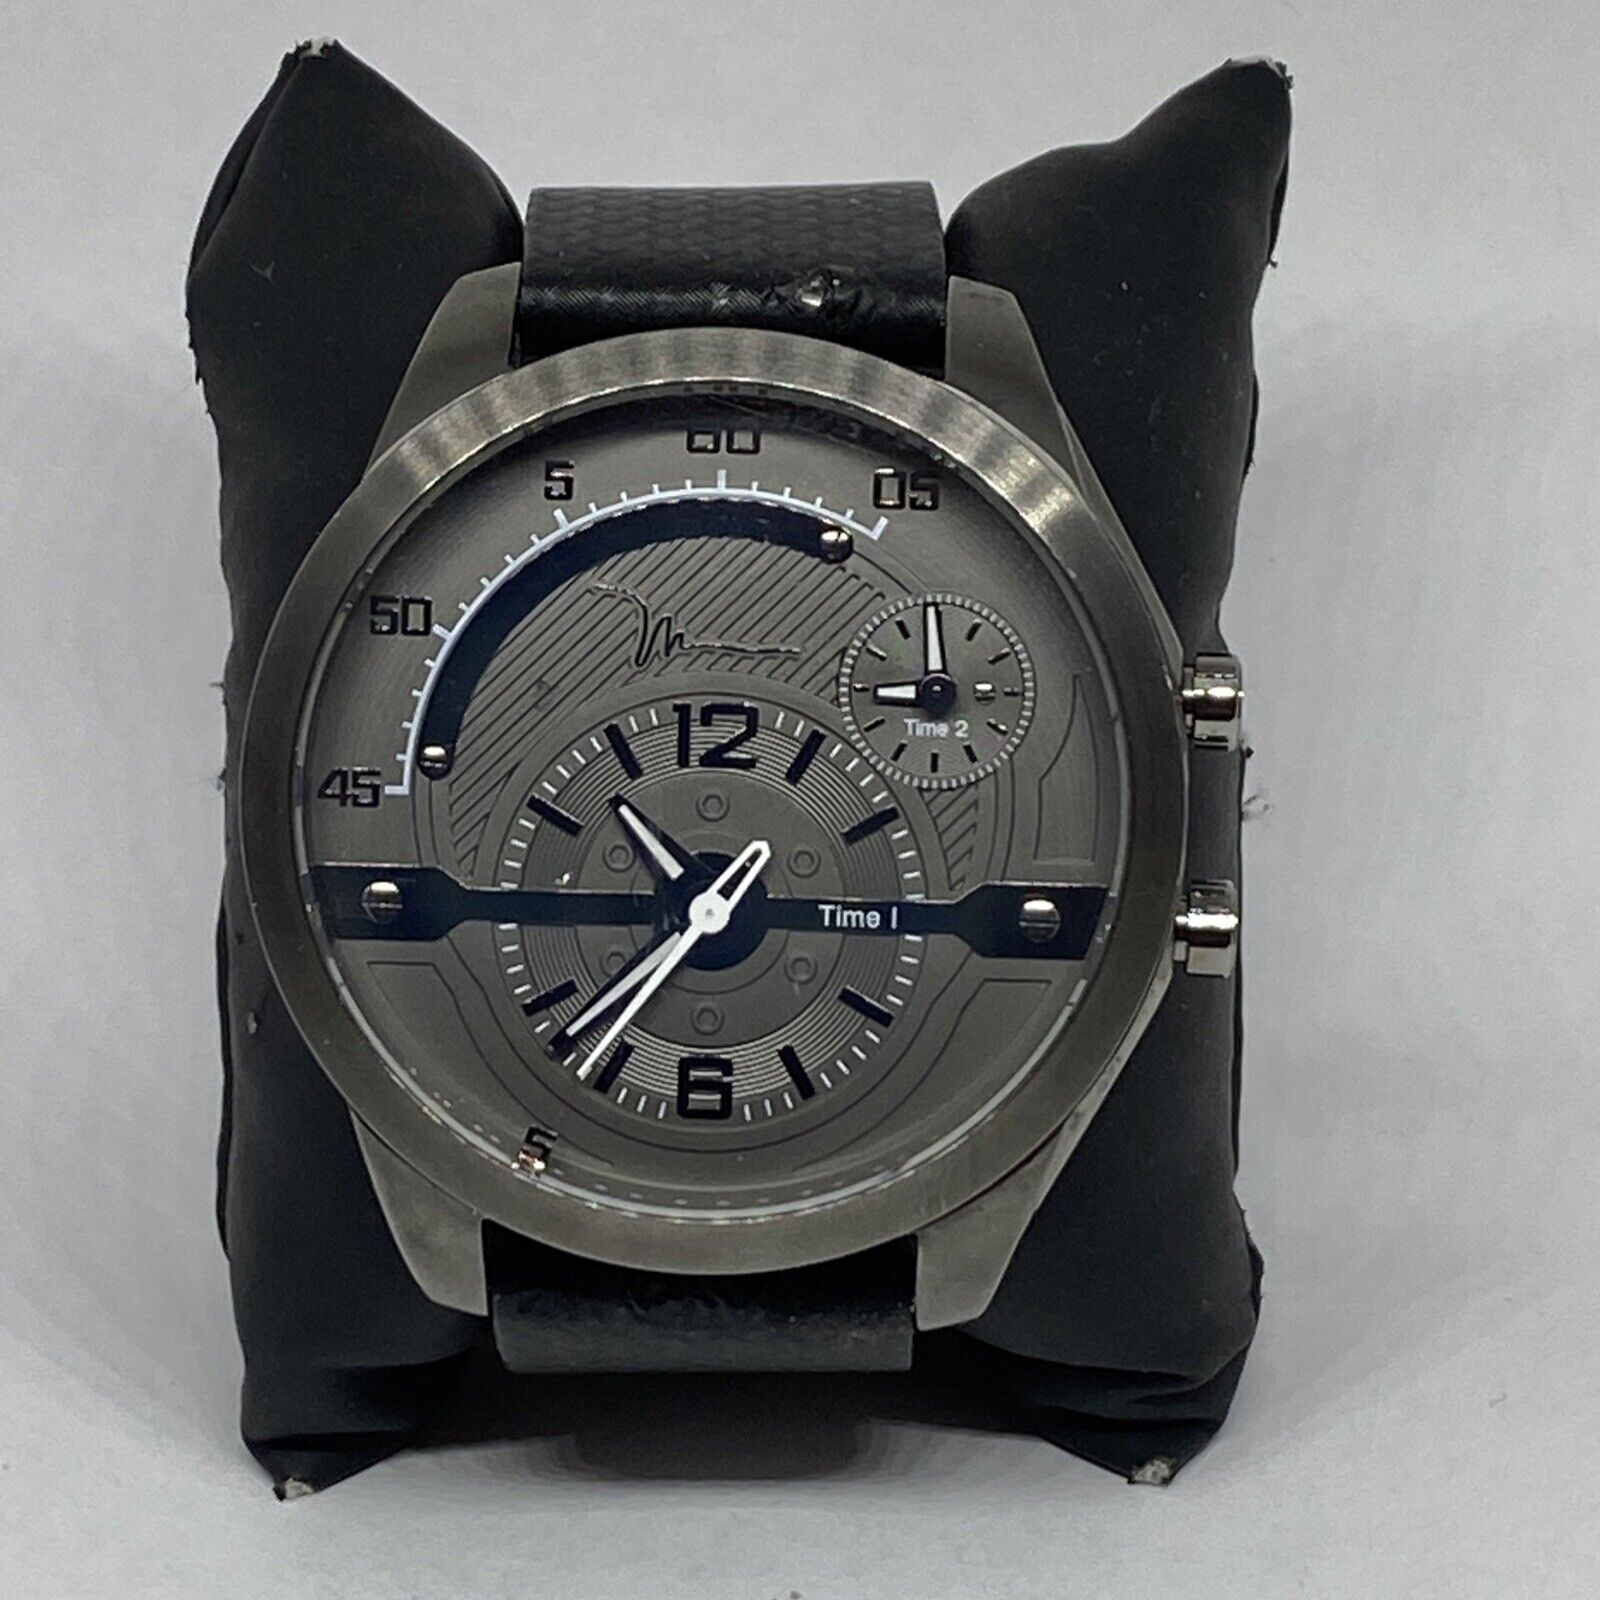 Marc Anthony FDMA155 Men's Black Leather Analog Dial Quartz Genuine Watch JK795